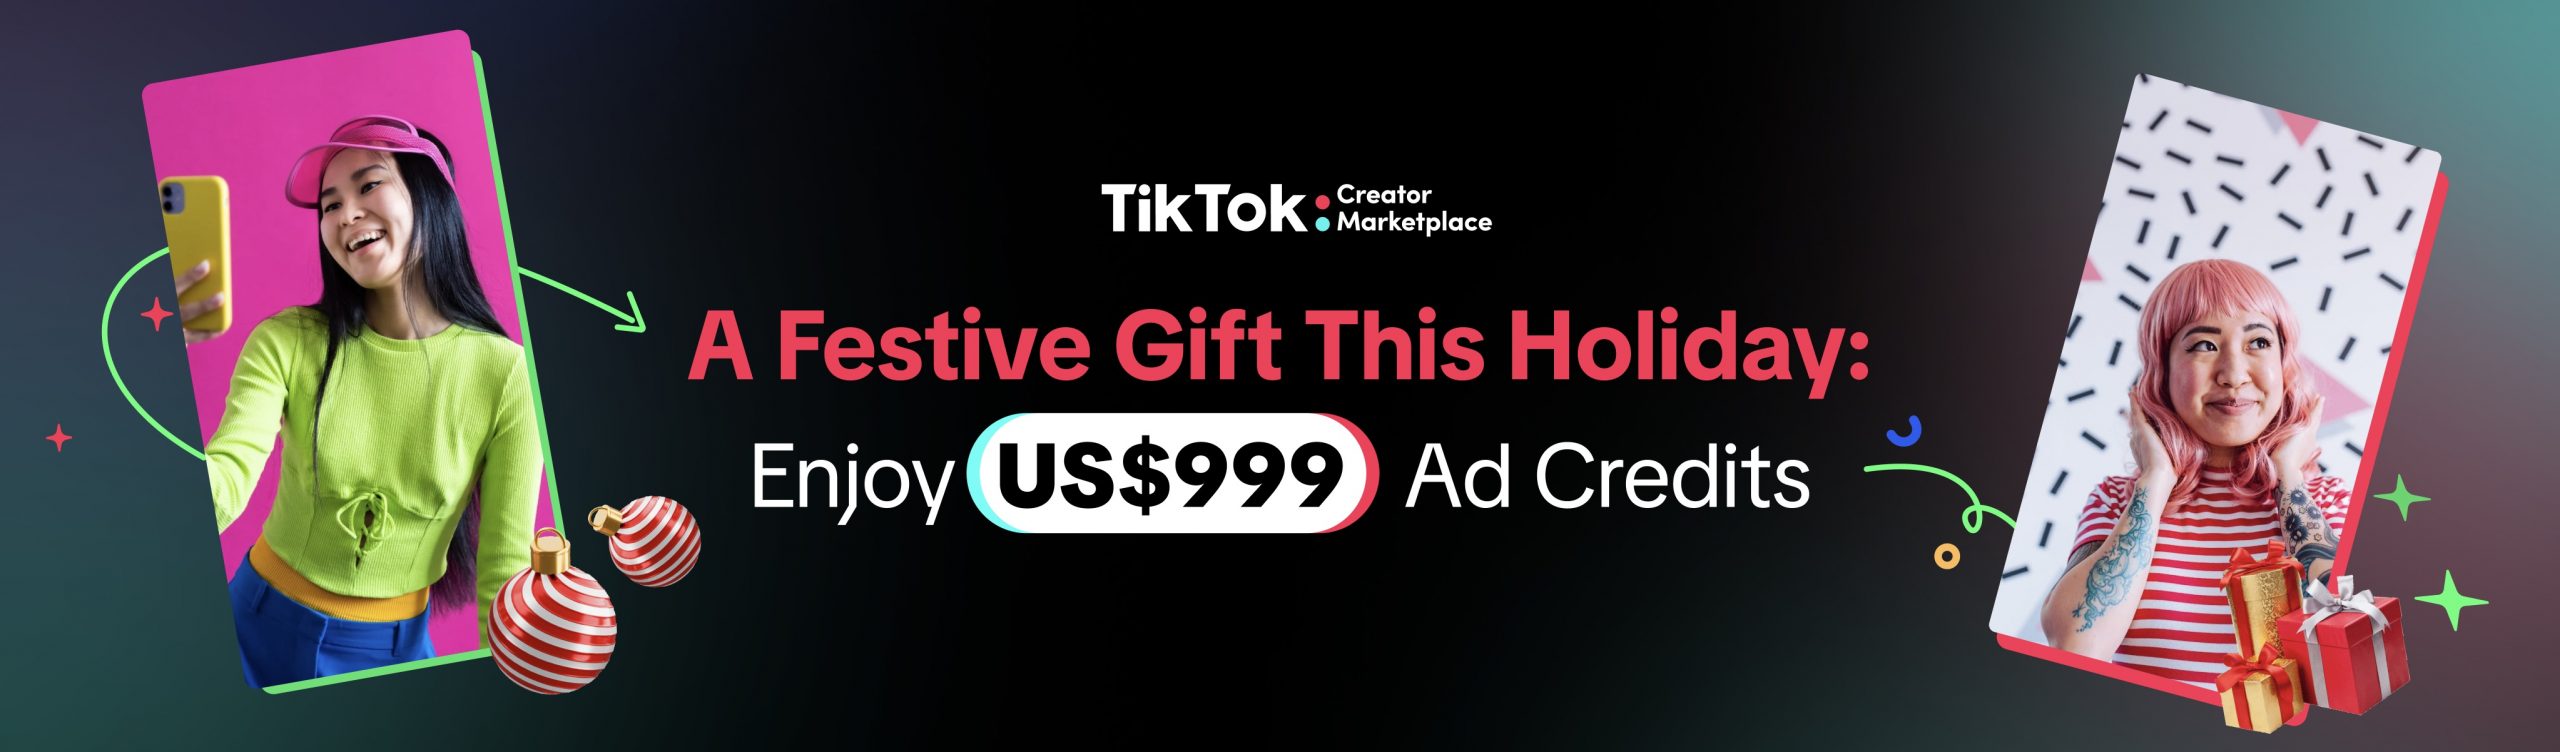 A Festive Gift: Enjoy US$999 Ad Credits this Holiday season